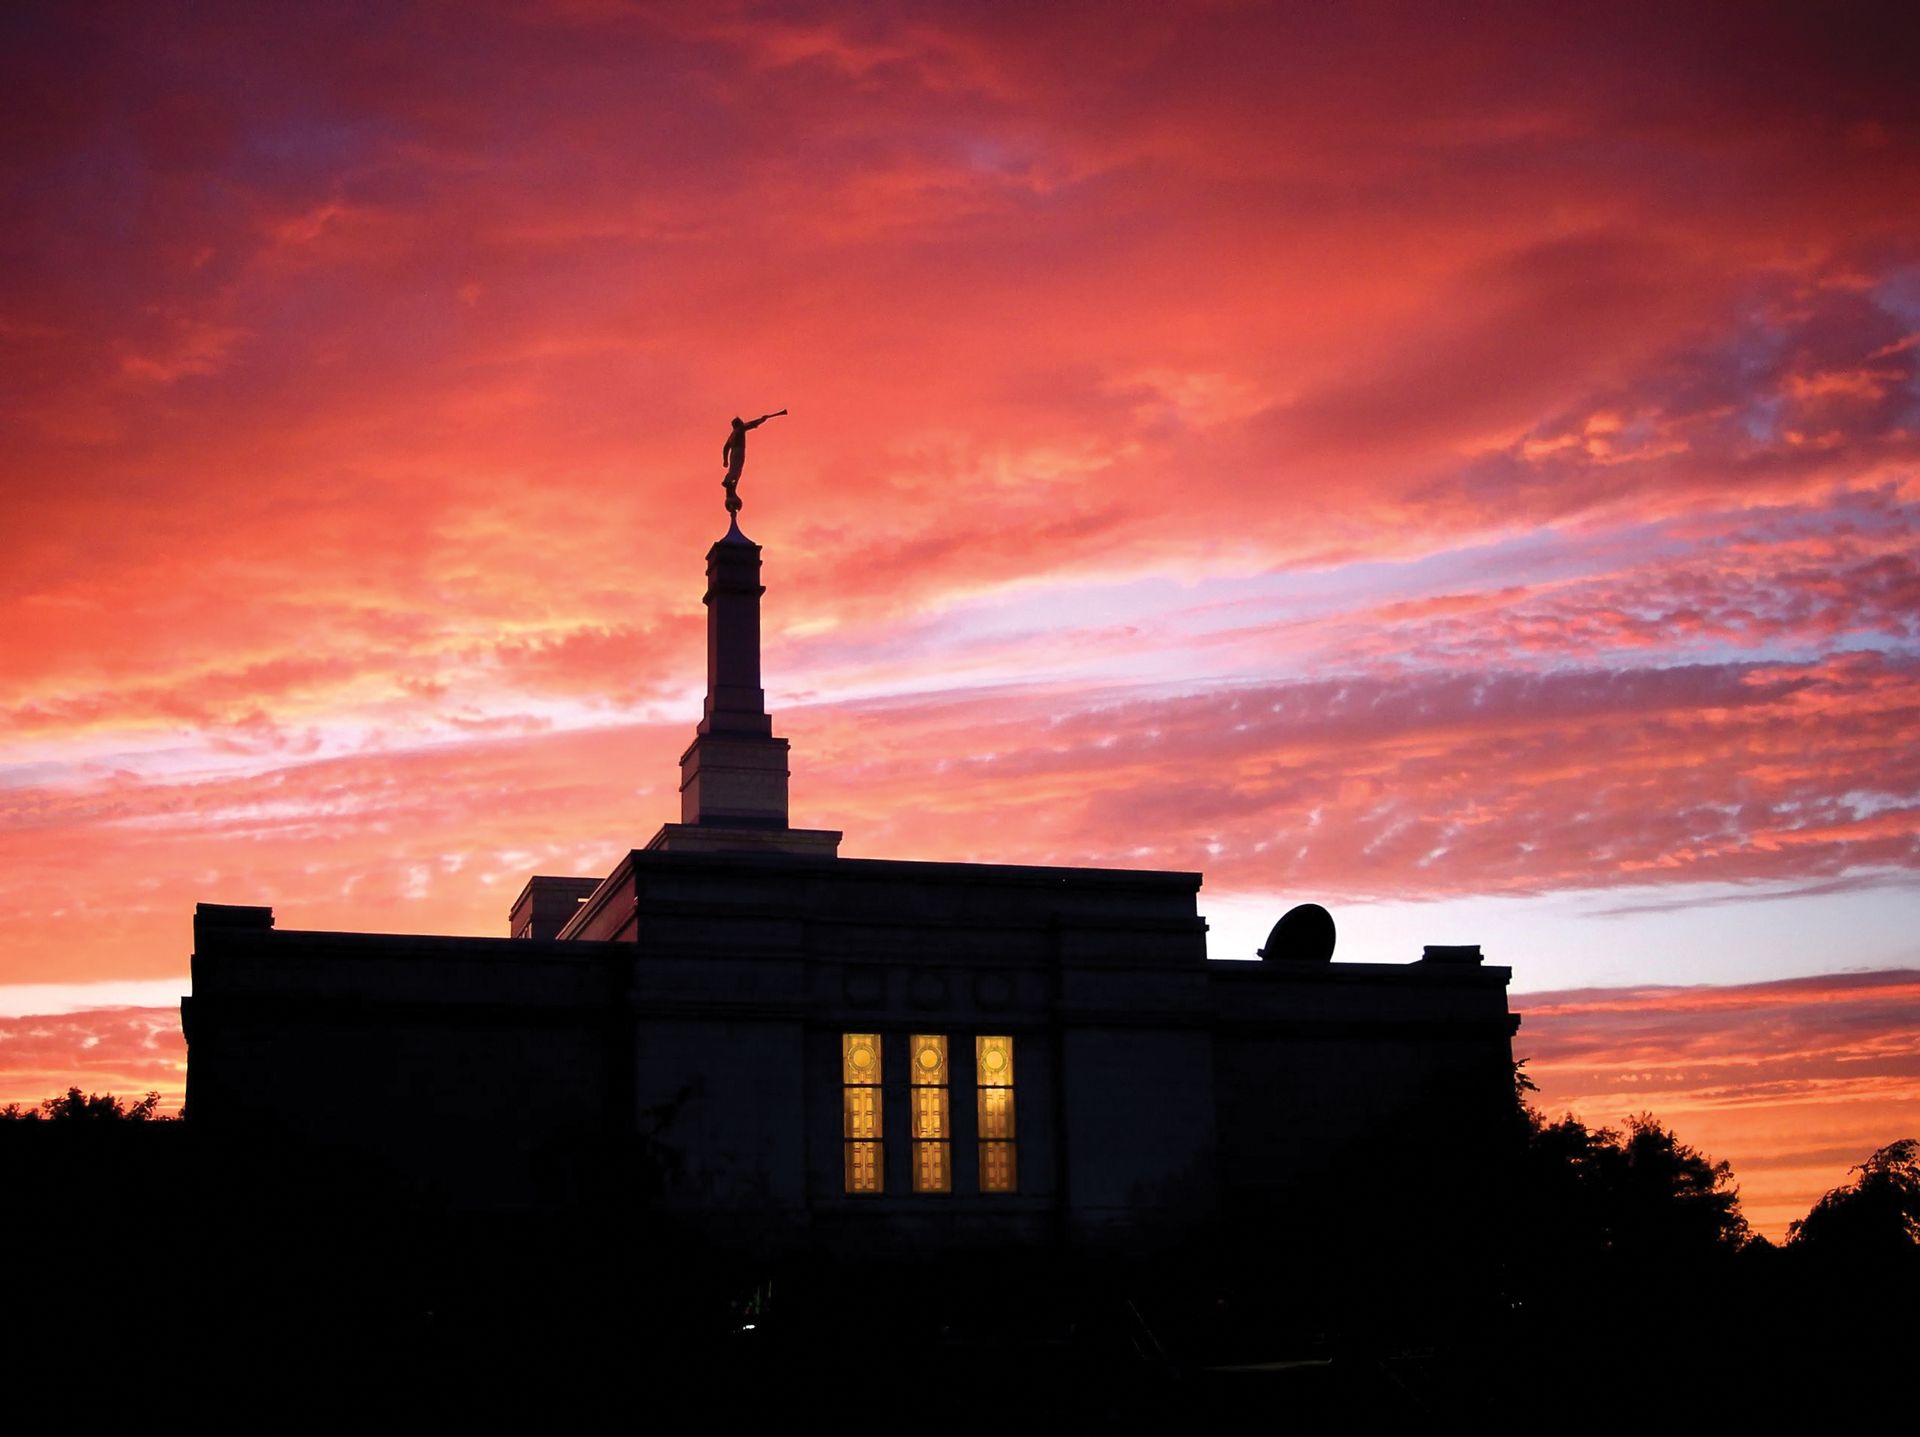 An exterior view of the Halifax Nova Scotia Temple at sunset.